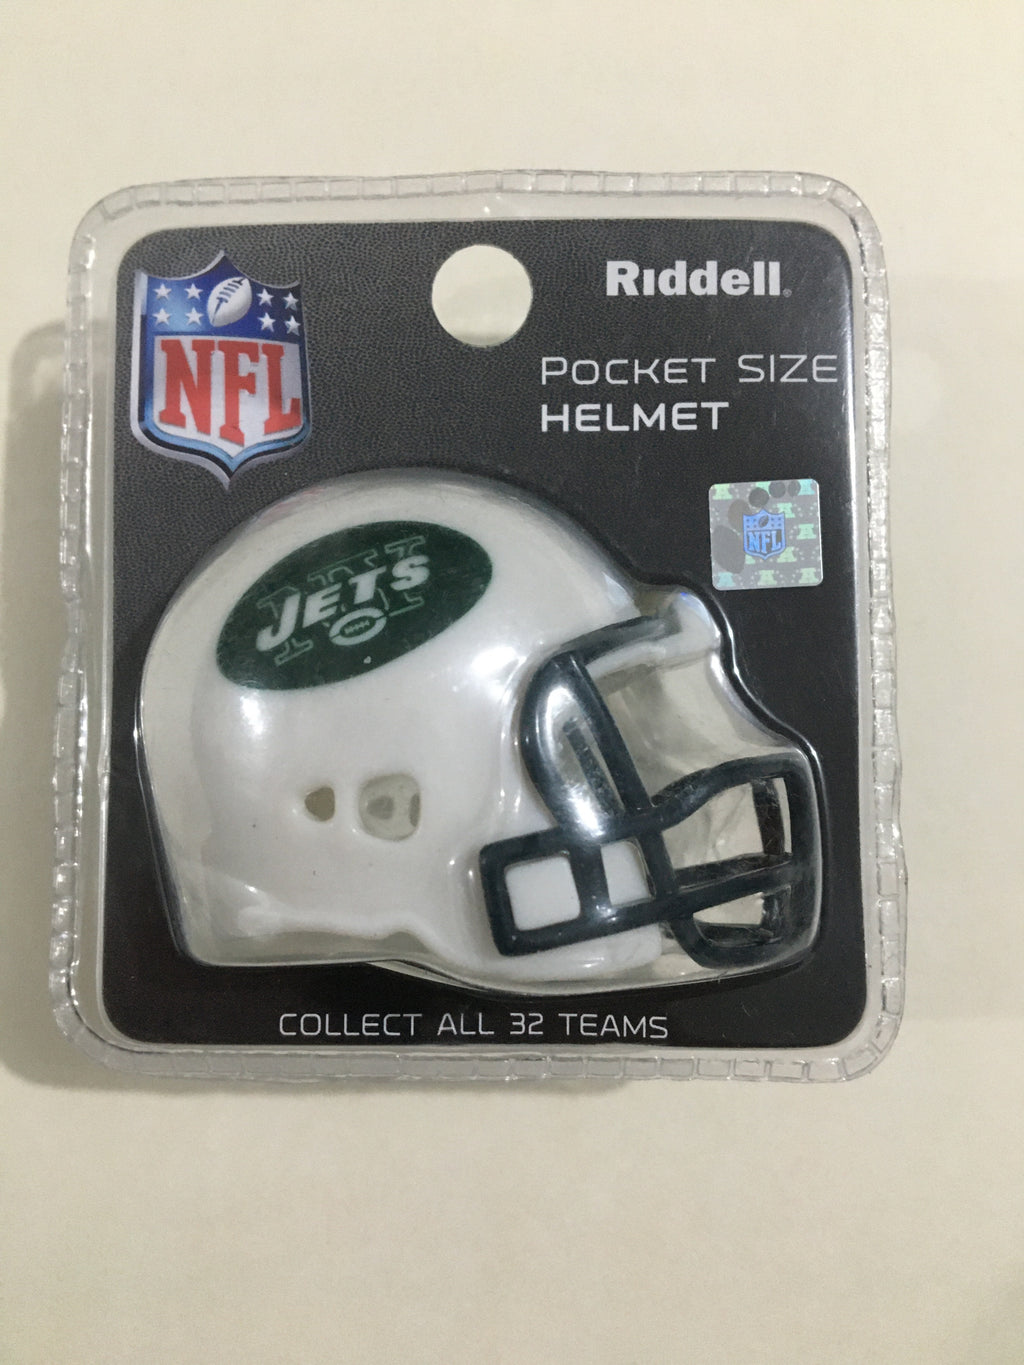 Pocket Size Helmet - Jets